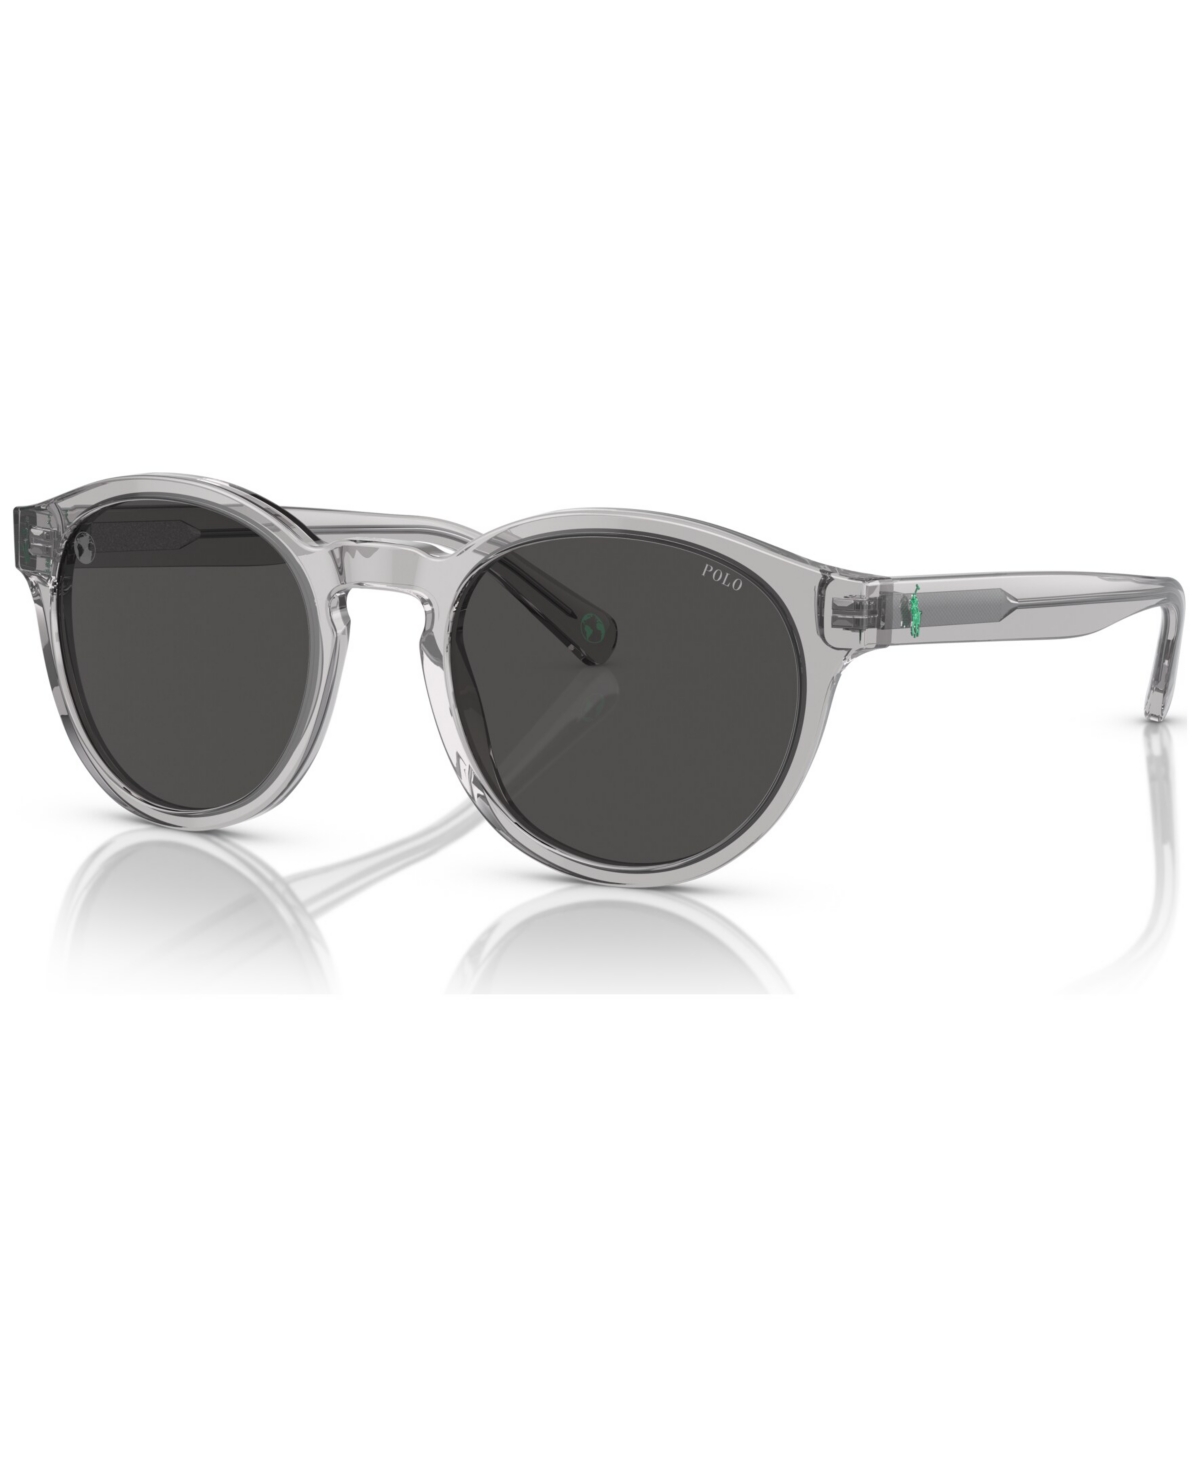 Polo Ralph Lauren Men's Sunglasses, Ph4192 In Shiny Transparent Gray